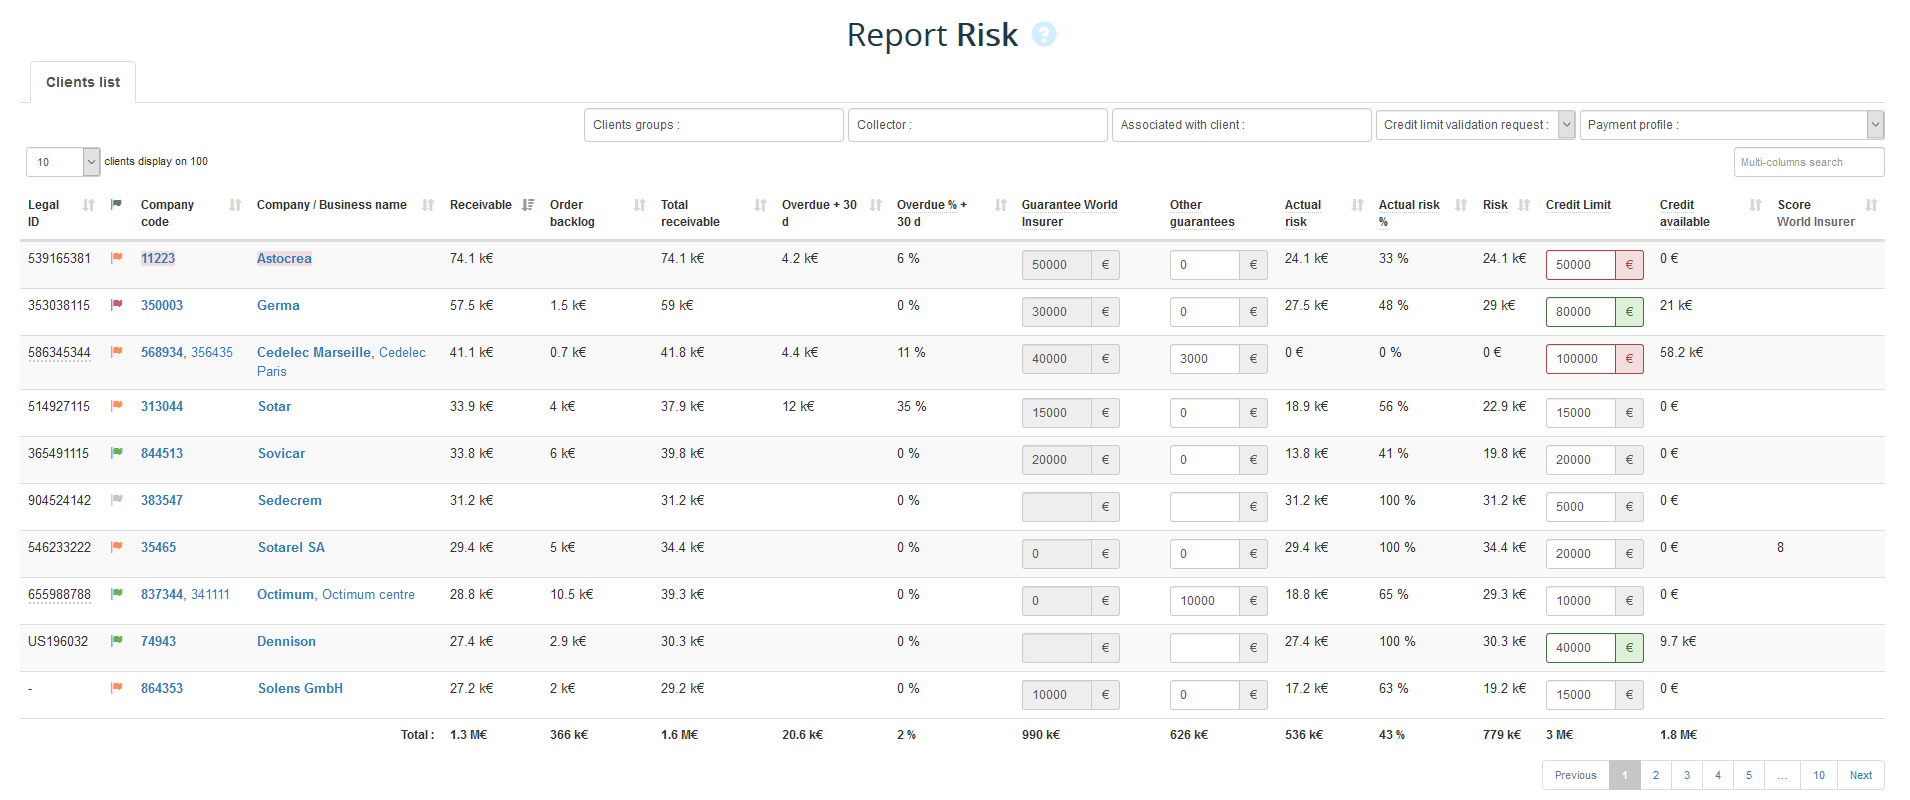 Risk report